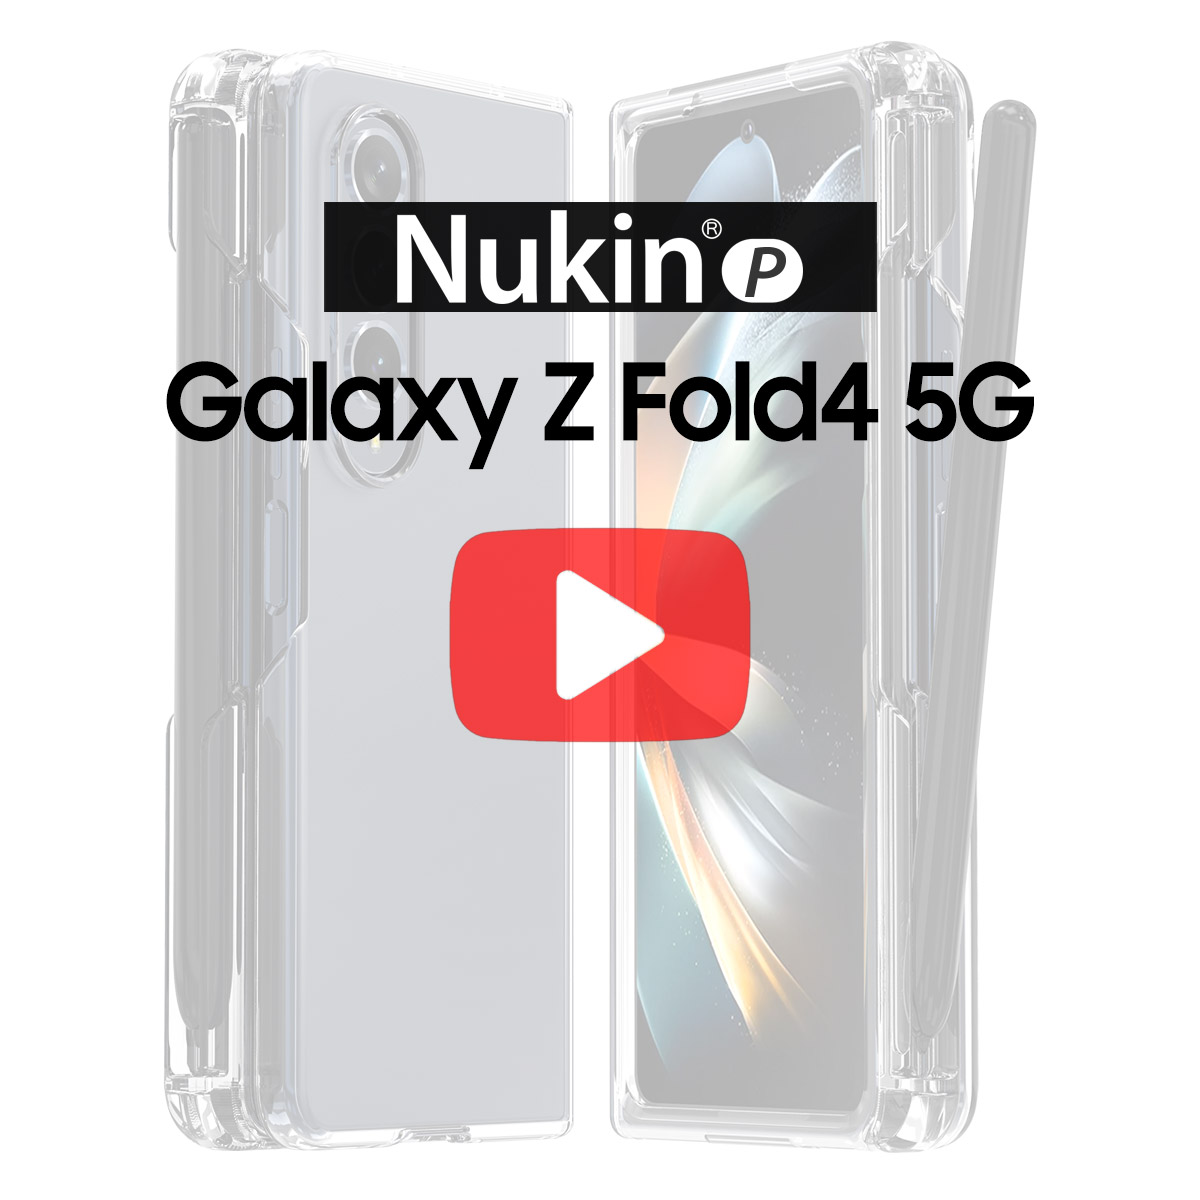 [Galaxy Z Fold4 5G] Nukin P